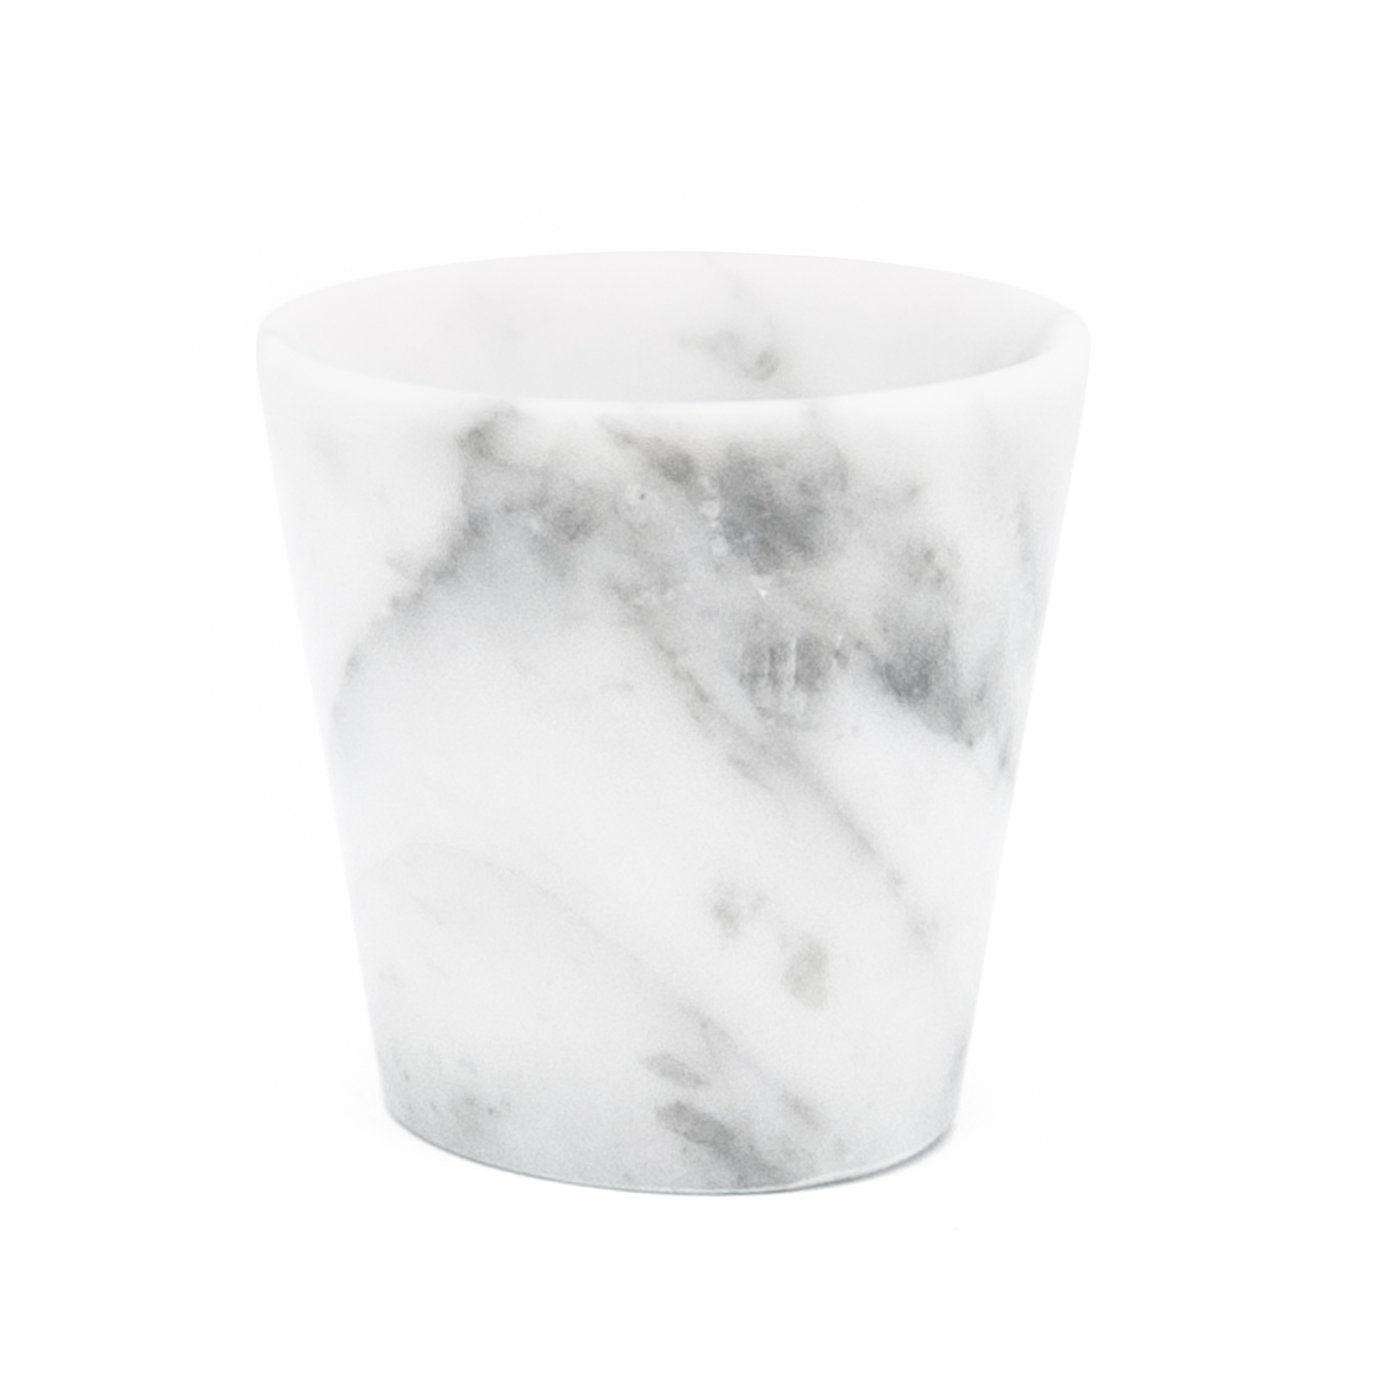 Set of 2 White Carrara Marble Grappa Glasses - Alternative view 1